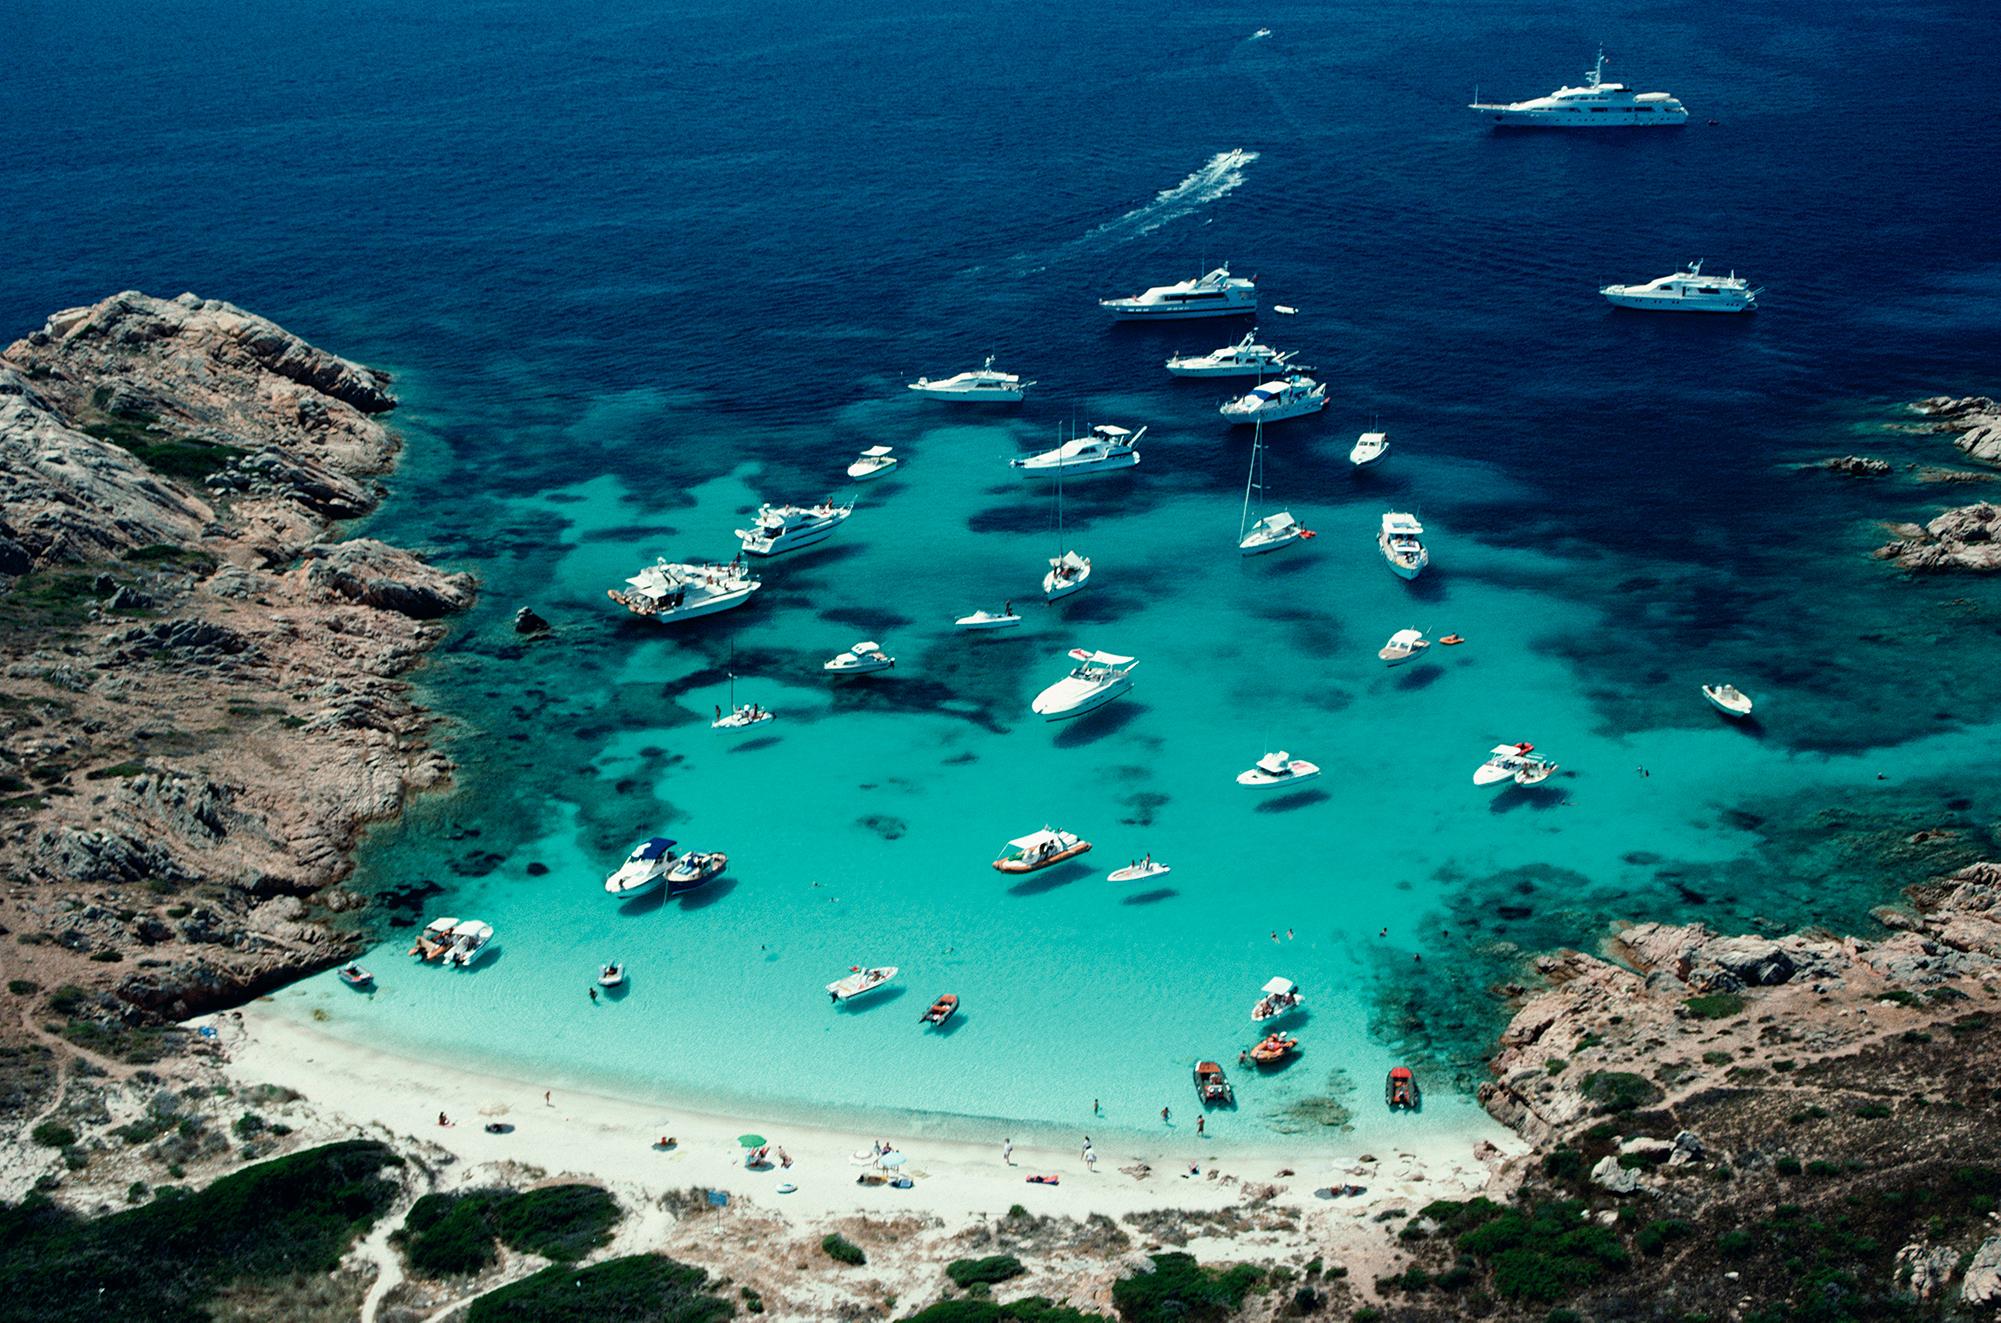 Slim Aarons Landscape Photograph - Porto Rotondo, #1 Estate Edition (Yachts in Sardinia, Italy)